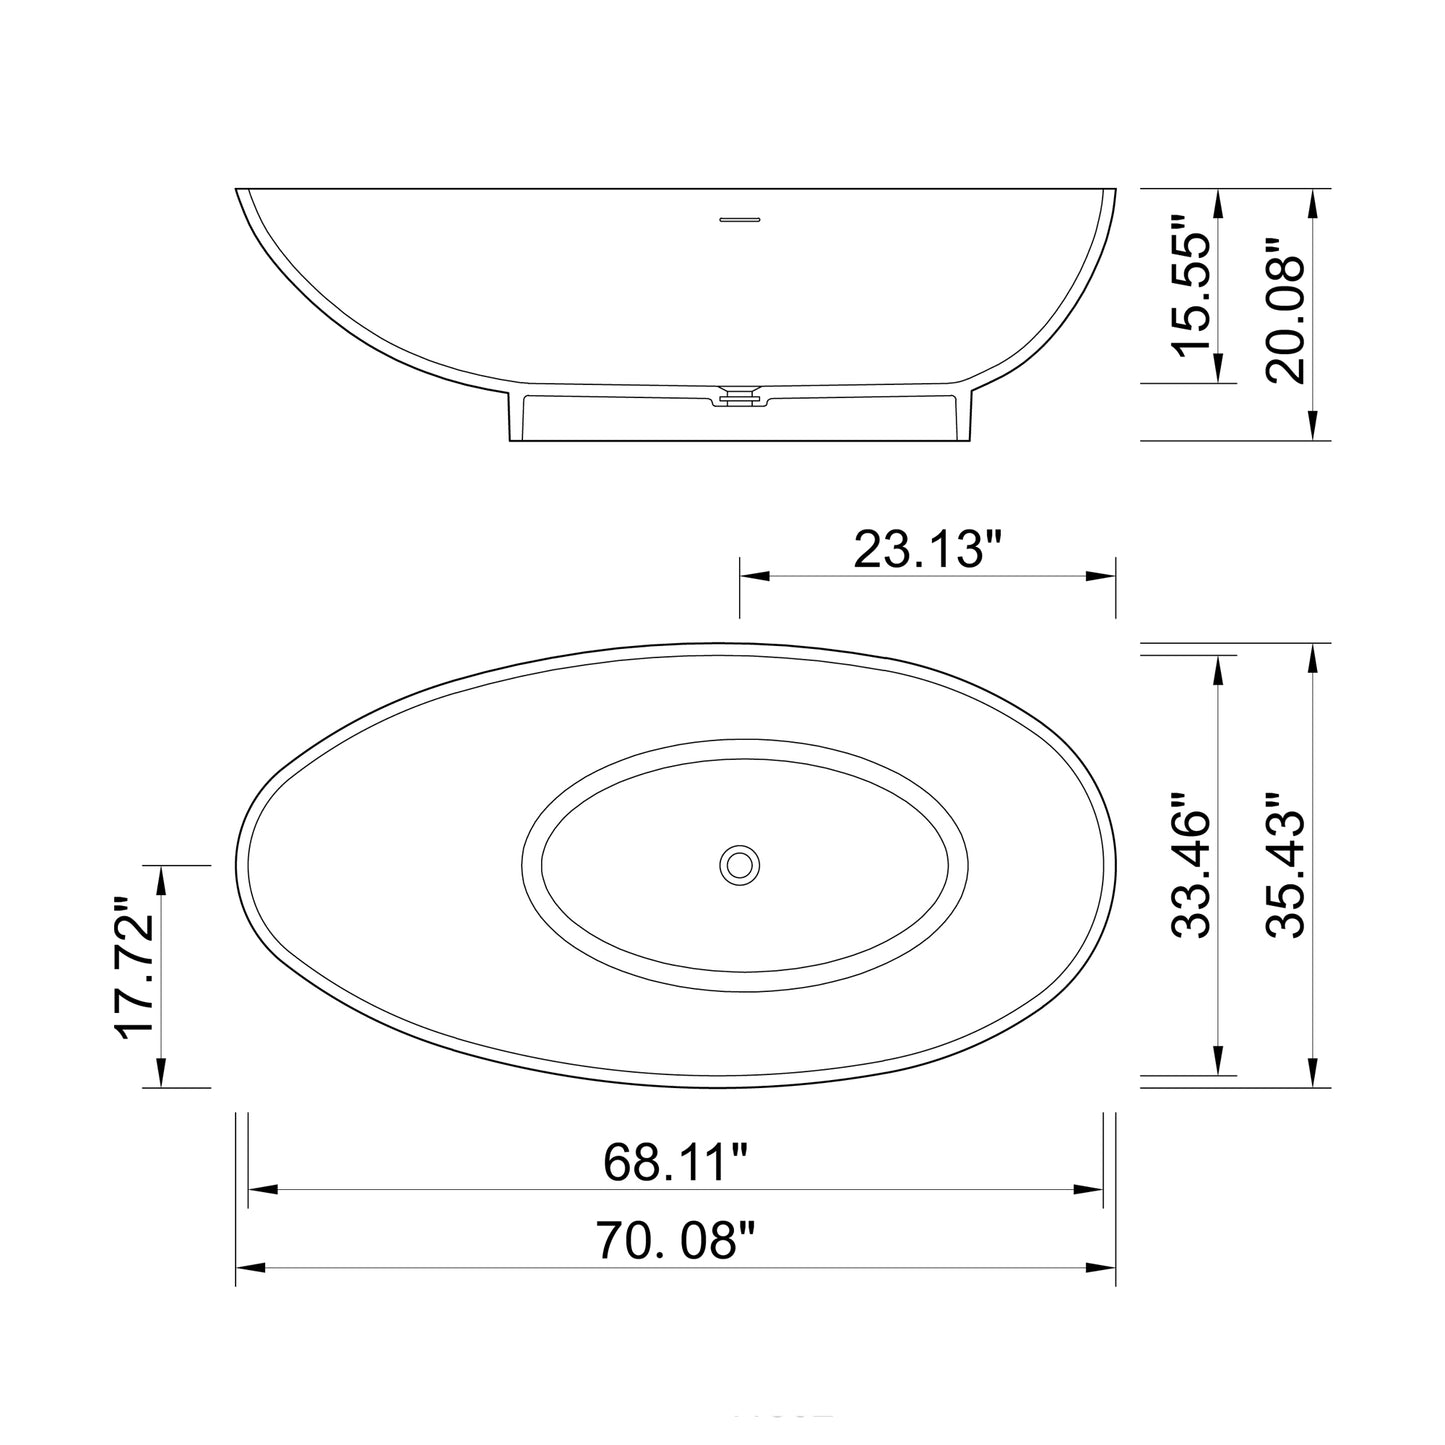 70 inch freestanding solid surface soaking bathtub for bathroom